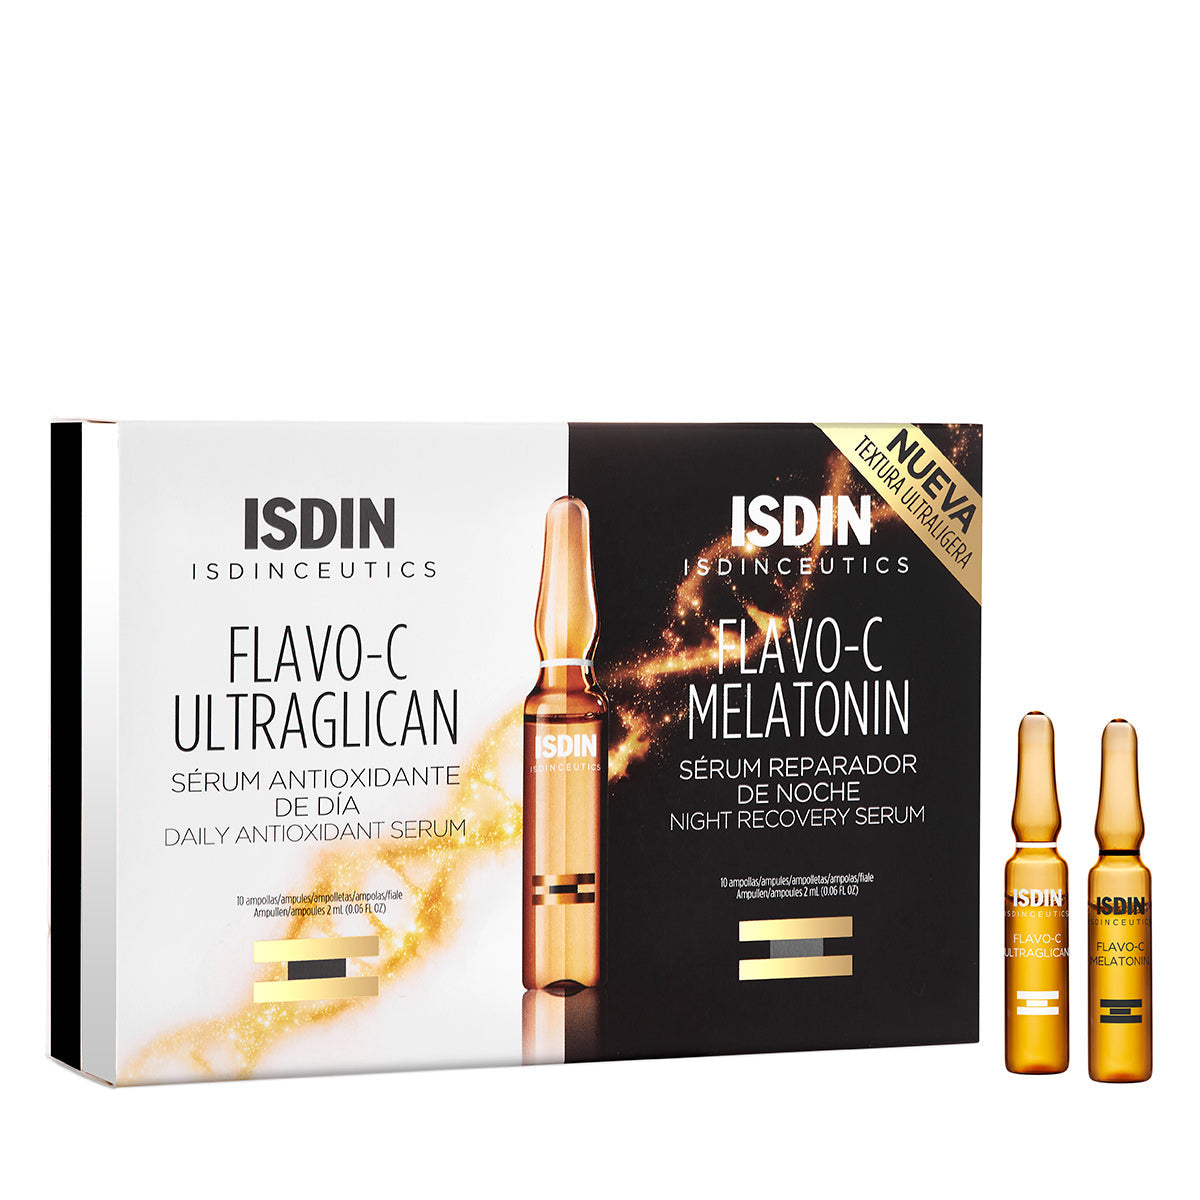 Isdin Isdinceutics Flavo-C Melatonin & Ultraglican 20 Ampollas